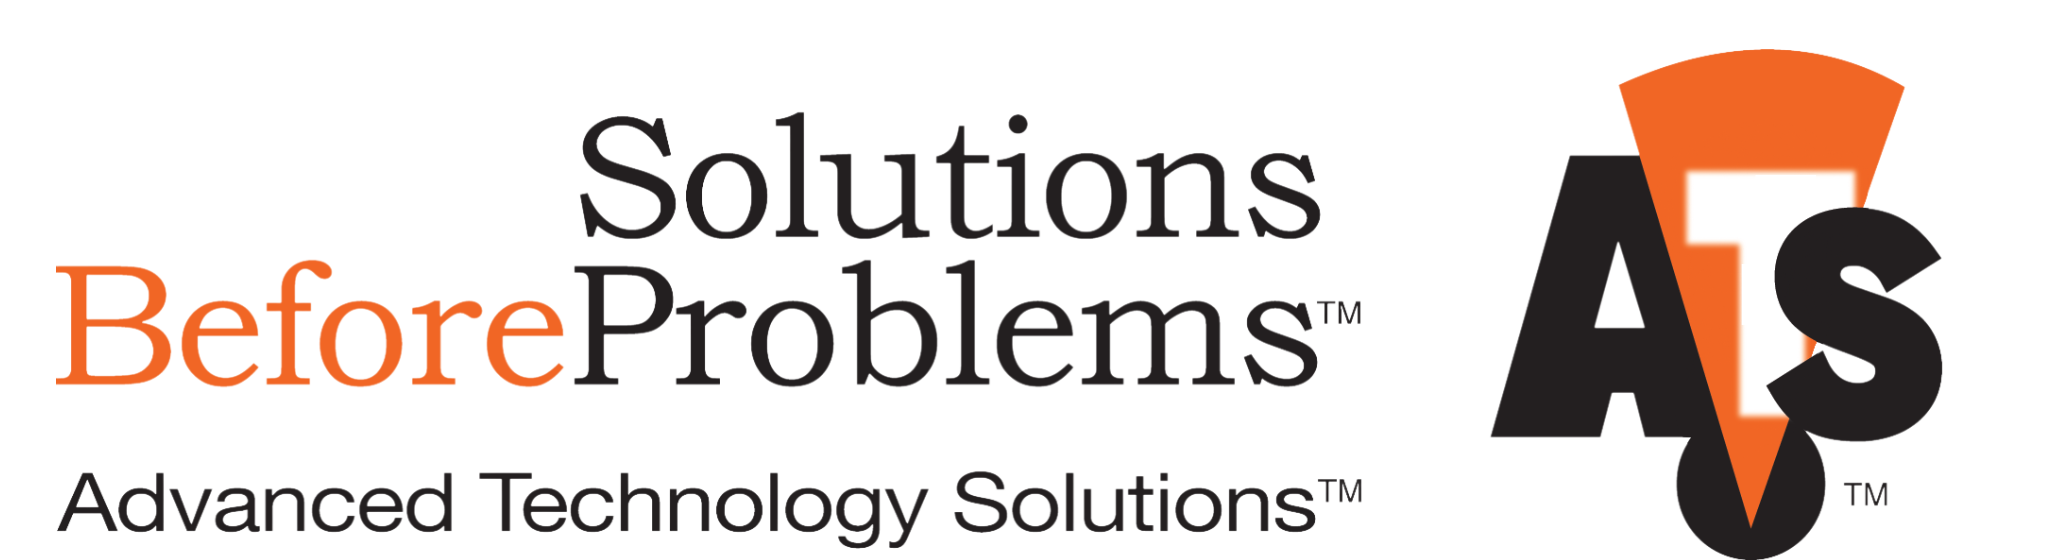 Advanced Technology Solutions logo